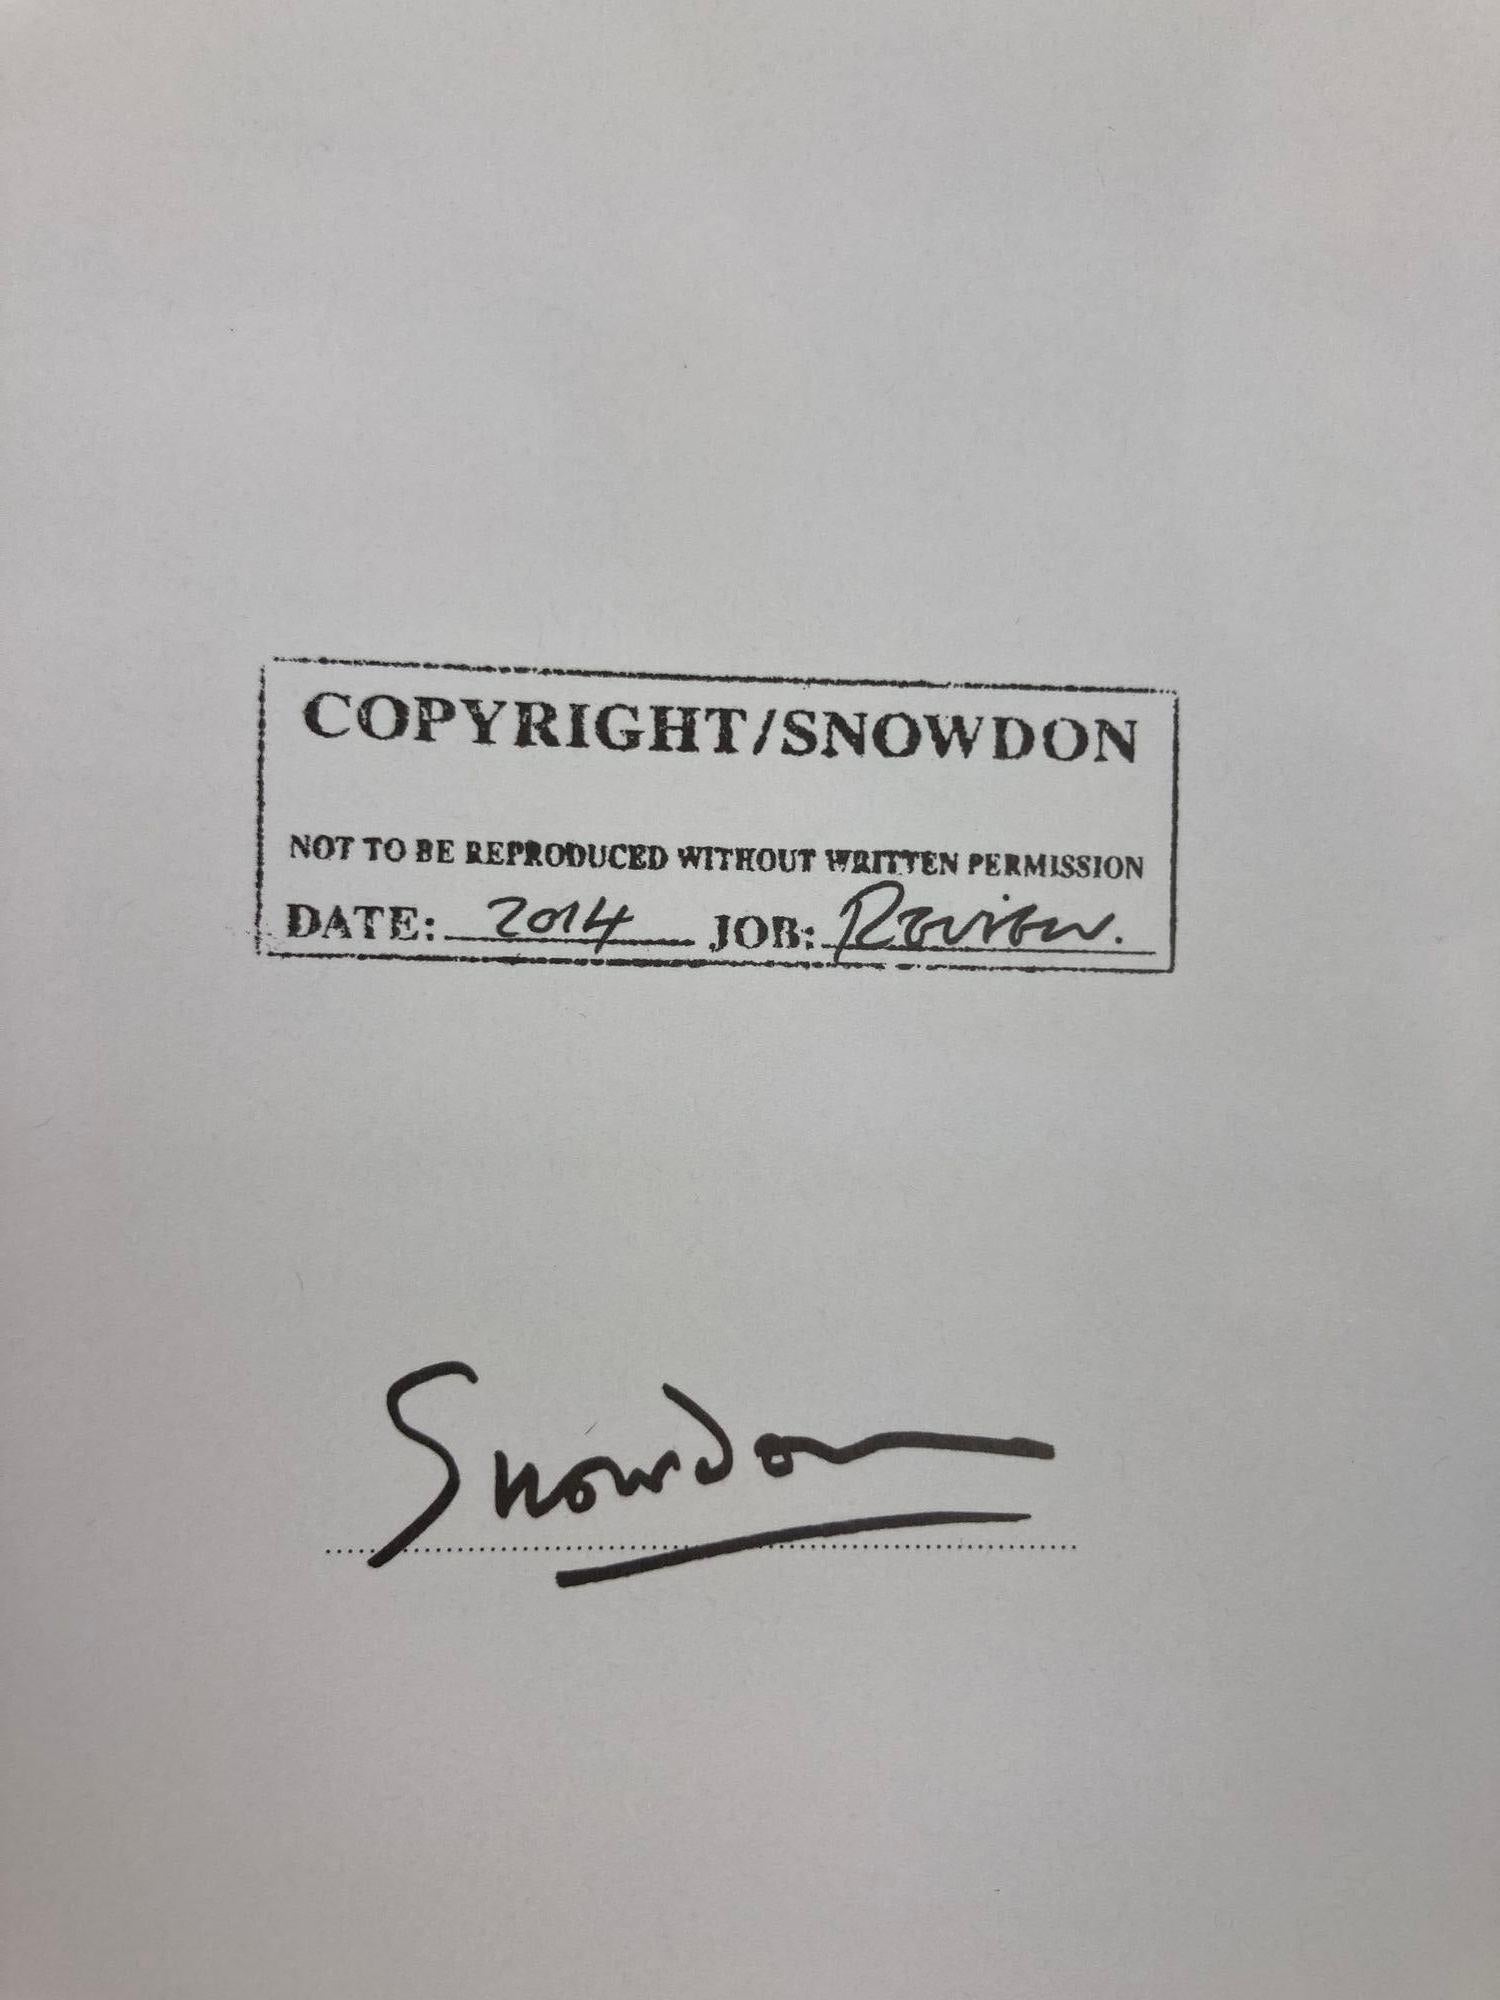 Britannique Snowdon: A Life in View, couverture rigide illustrée par Antony Armstrong Jones 2014 en vente